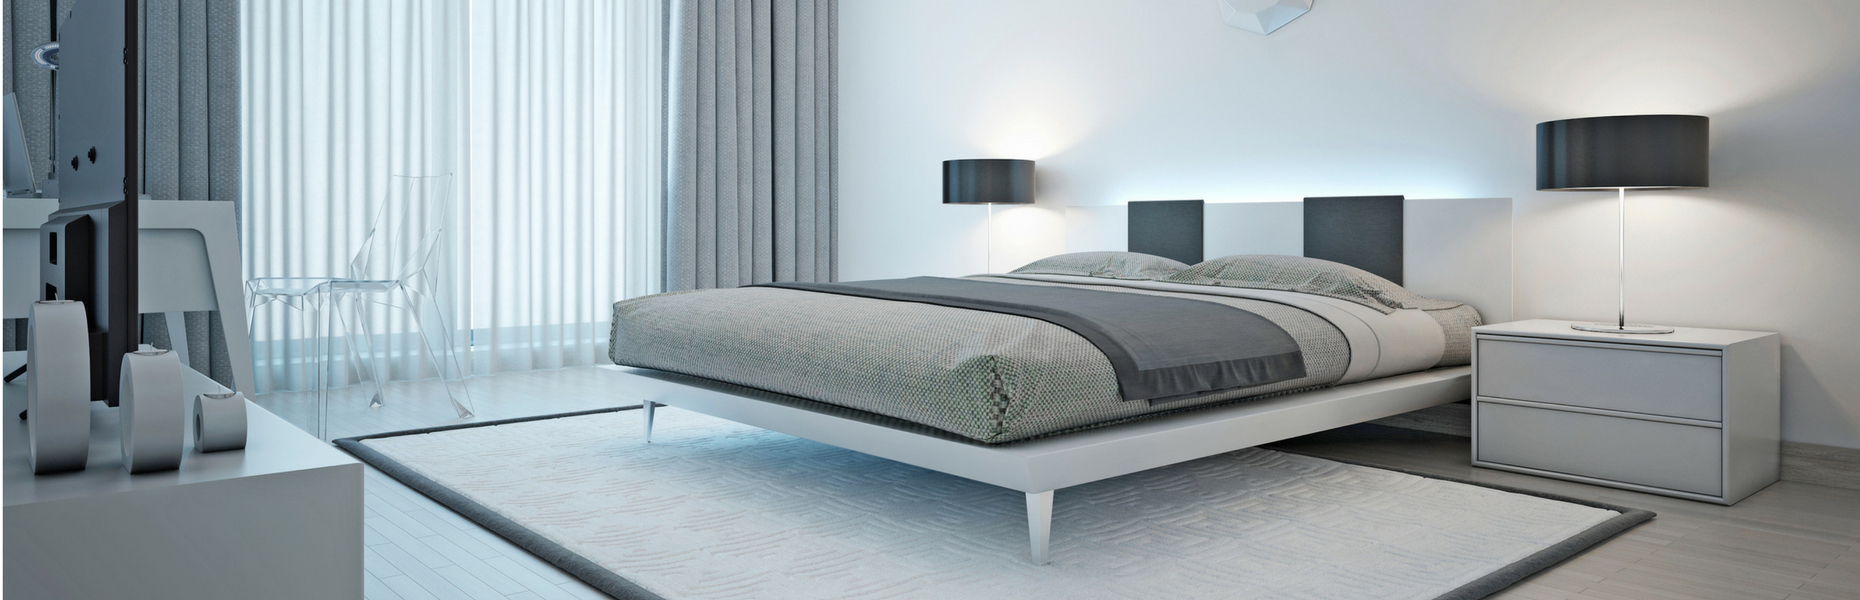 Top 5 Best Bedroom Colors To Sleep Better Vita Talalay regarding size 1860 X 600